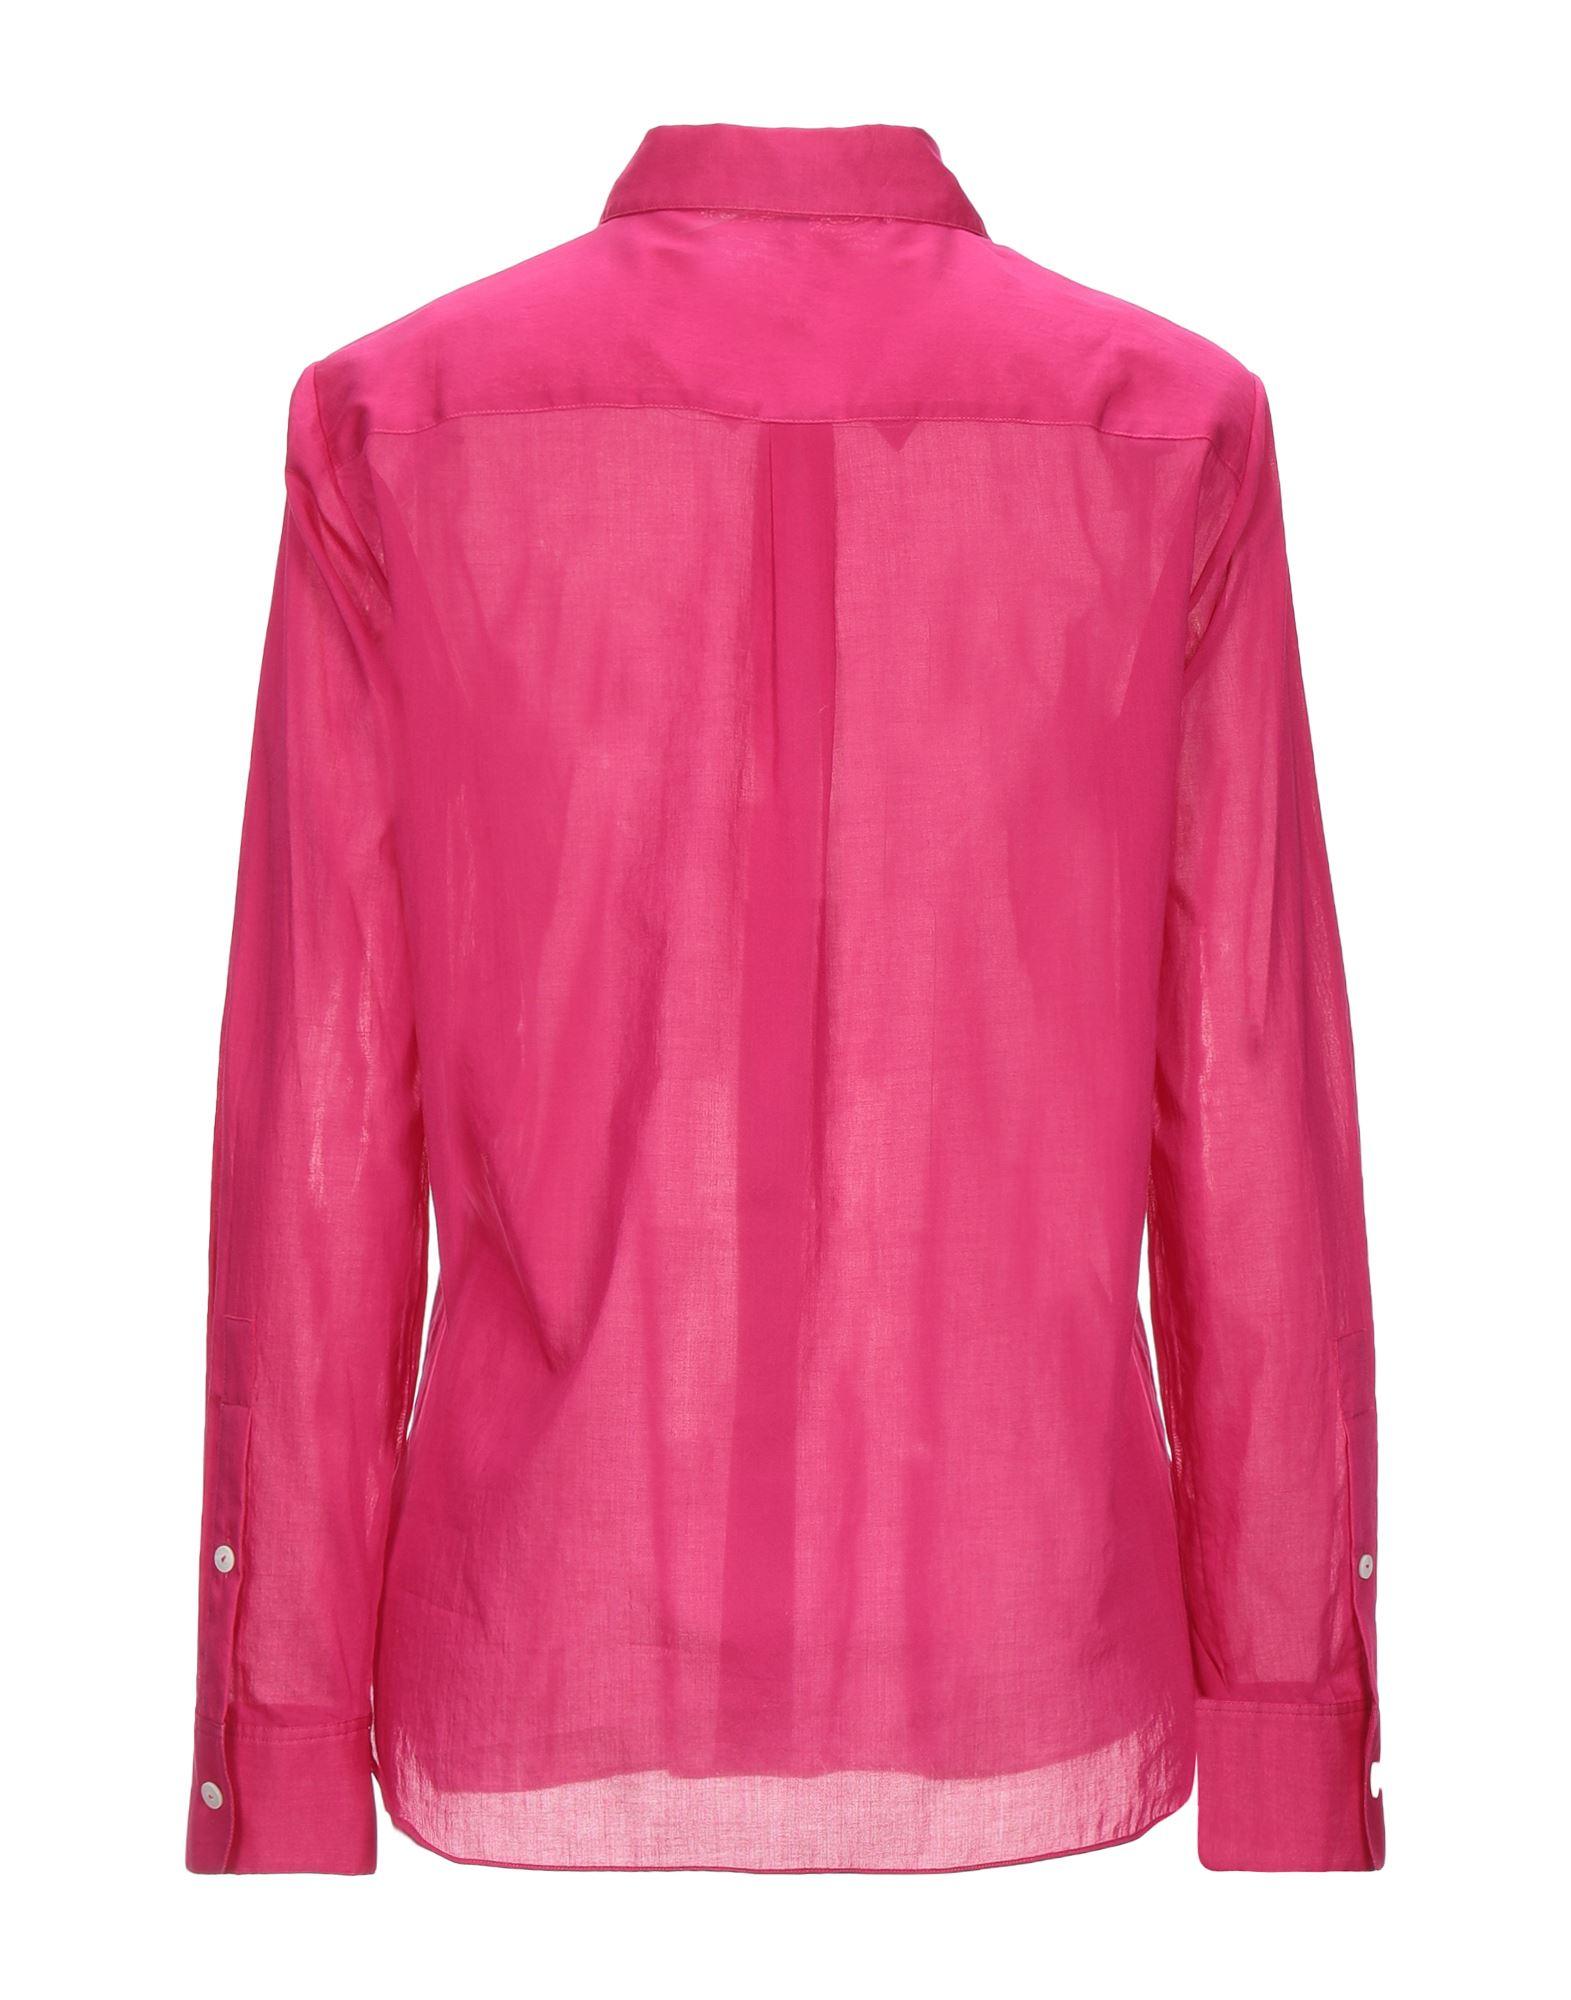 Theory Shirt in Garnet (Pink) - Lyst